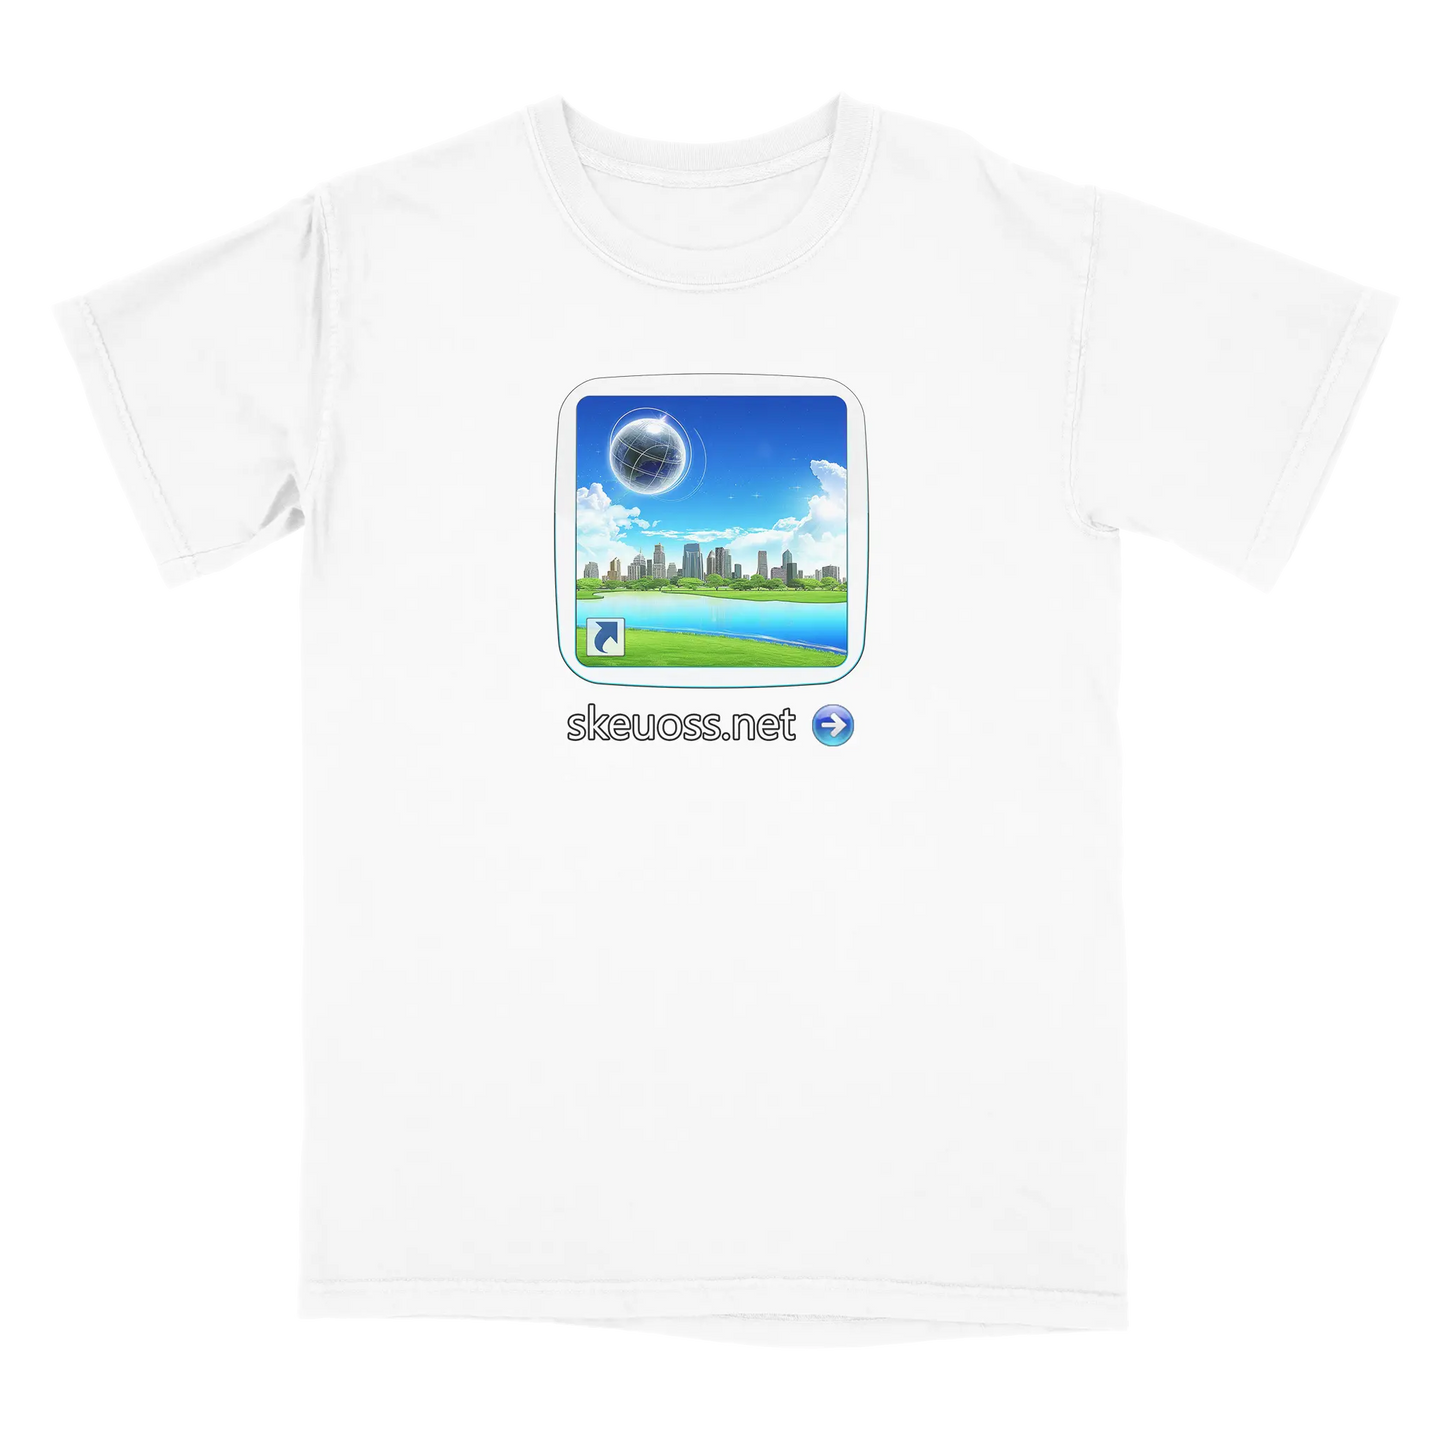 Frutiger Aero T-shirt - User Login Collection - User 381